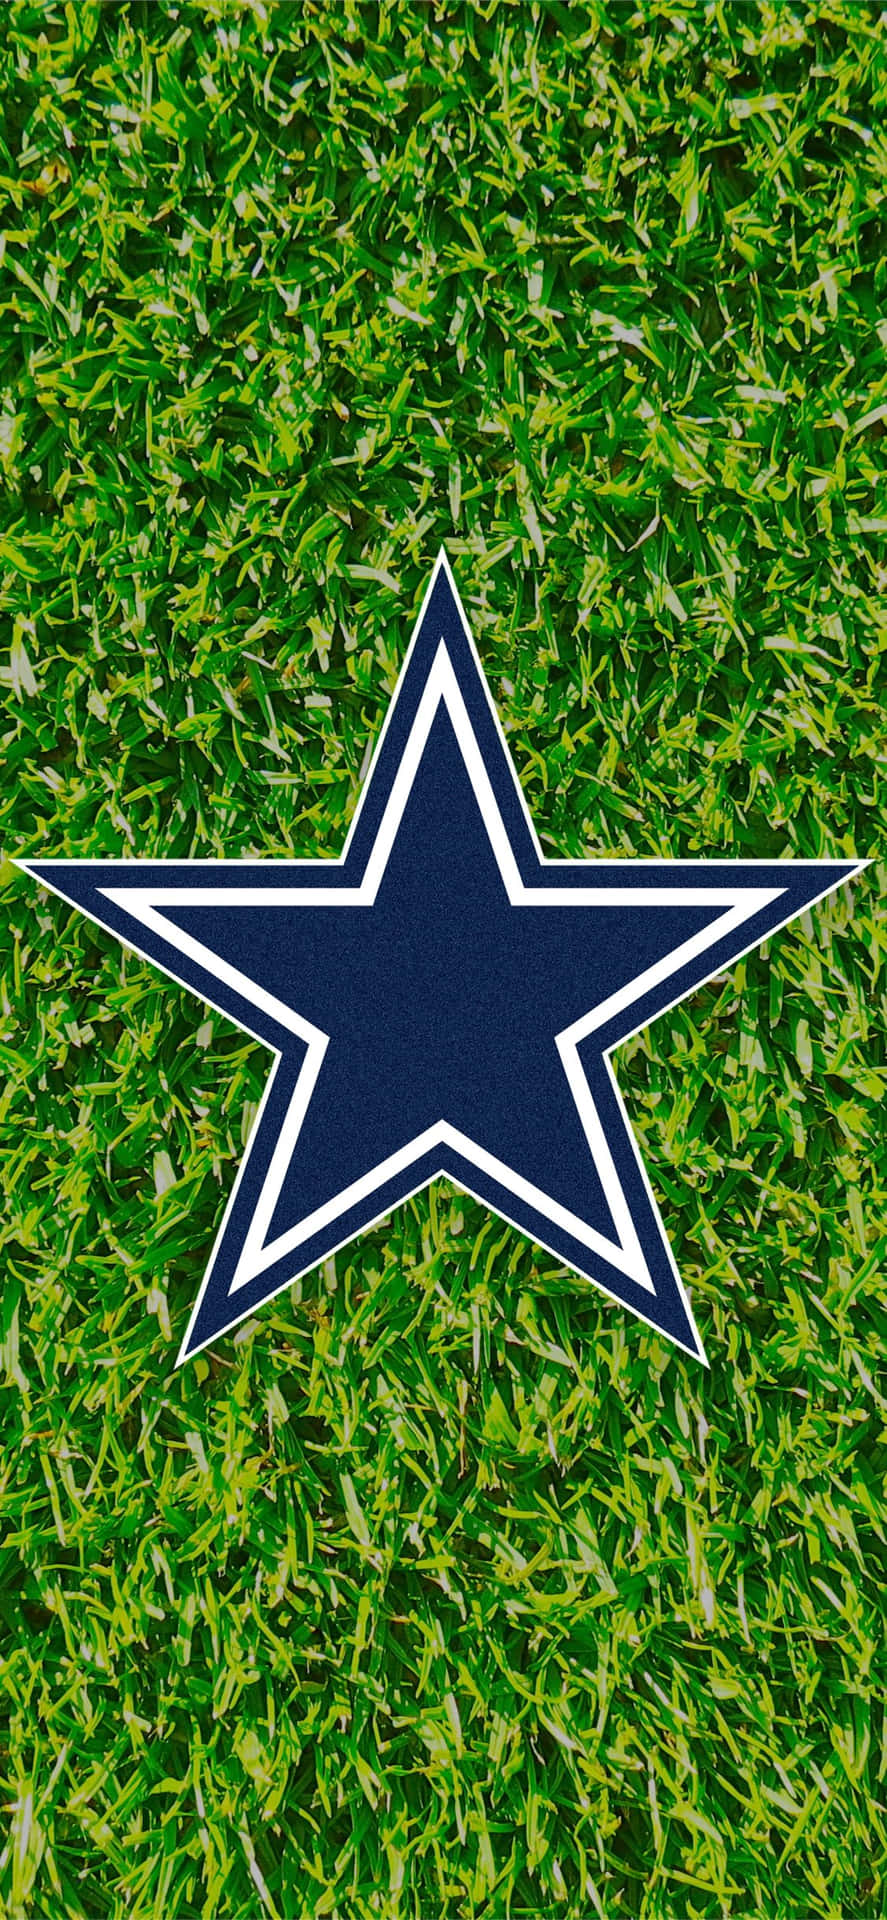 Frischesgras Und Das Logo Der Dallas Cowboys Iphone Wallpaper